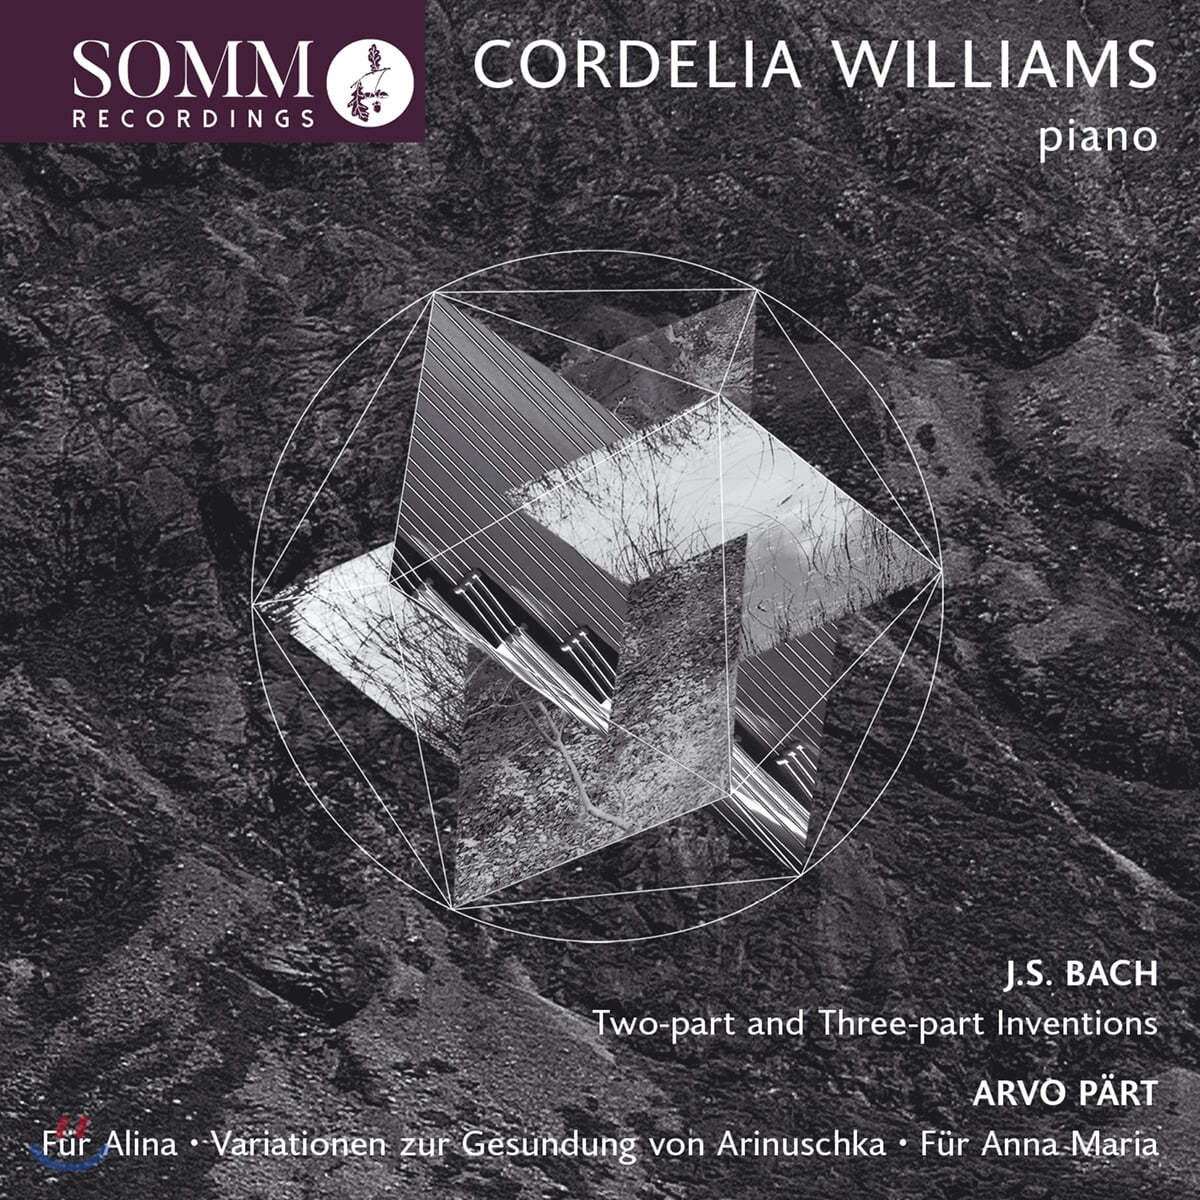 Cordelia Williams 바흐: 인벤션과 신포니아 / 아르보 패르트: 알리나 - 코딜리어 윌리엄스 (Bach / Arvo Part)